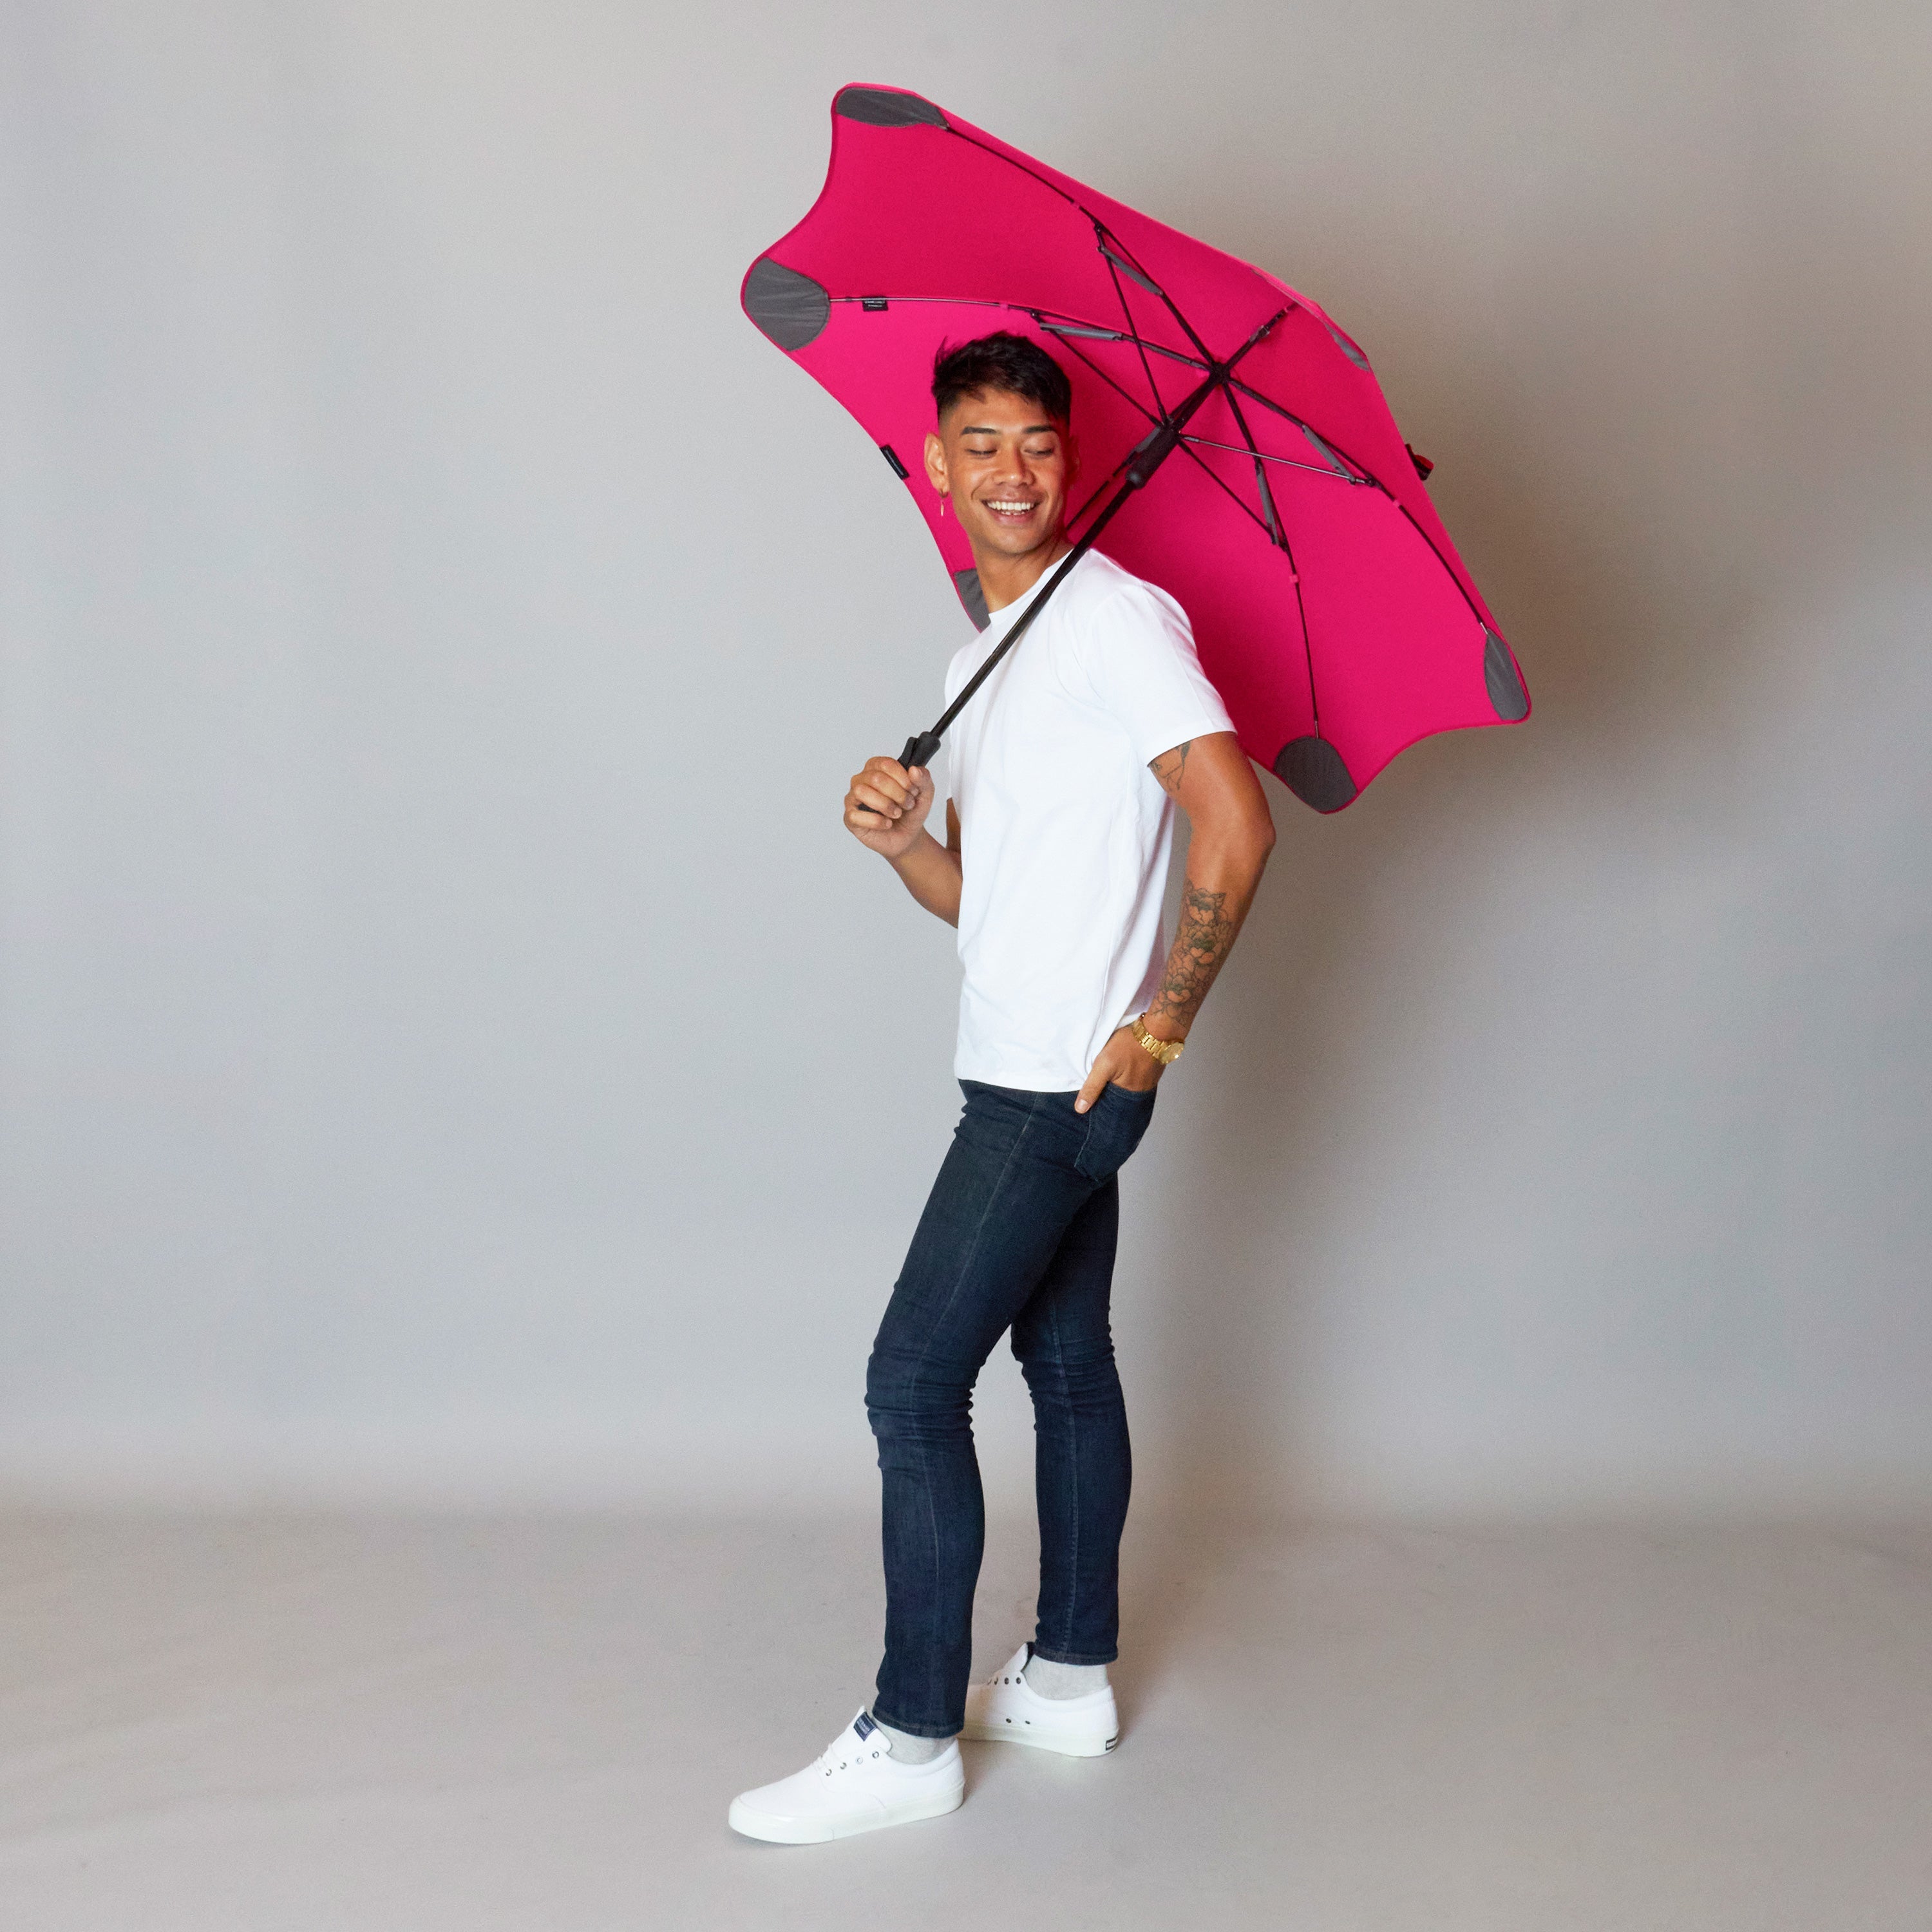 2020 Classic Pink Blunt Umbrella Model Side View